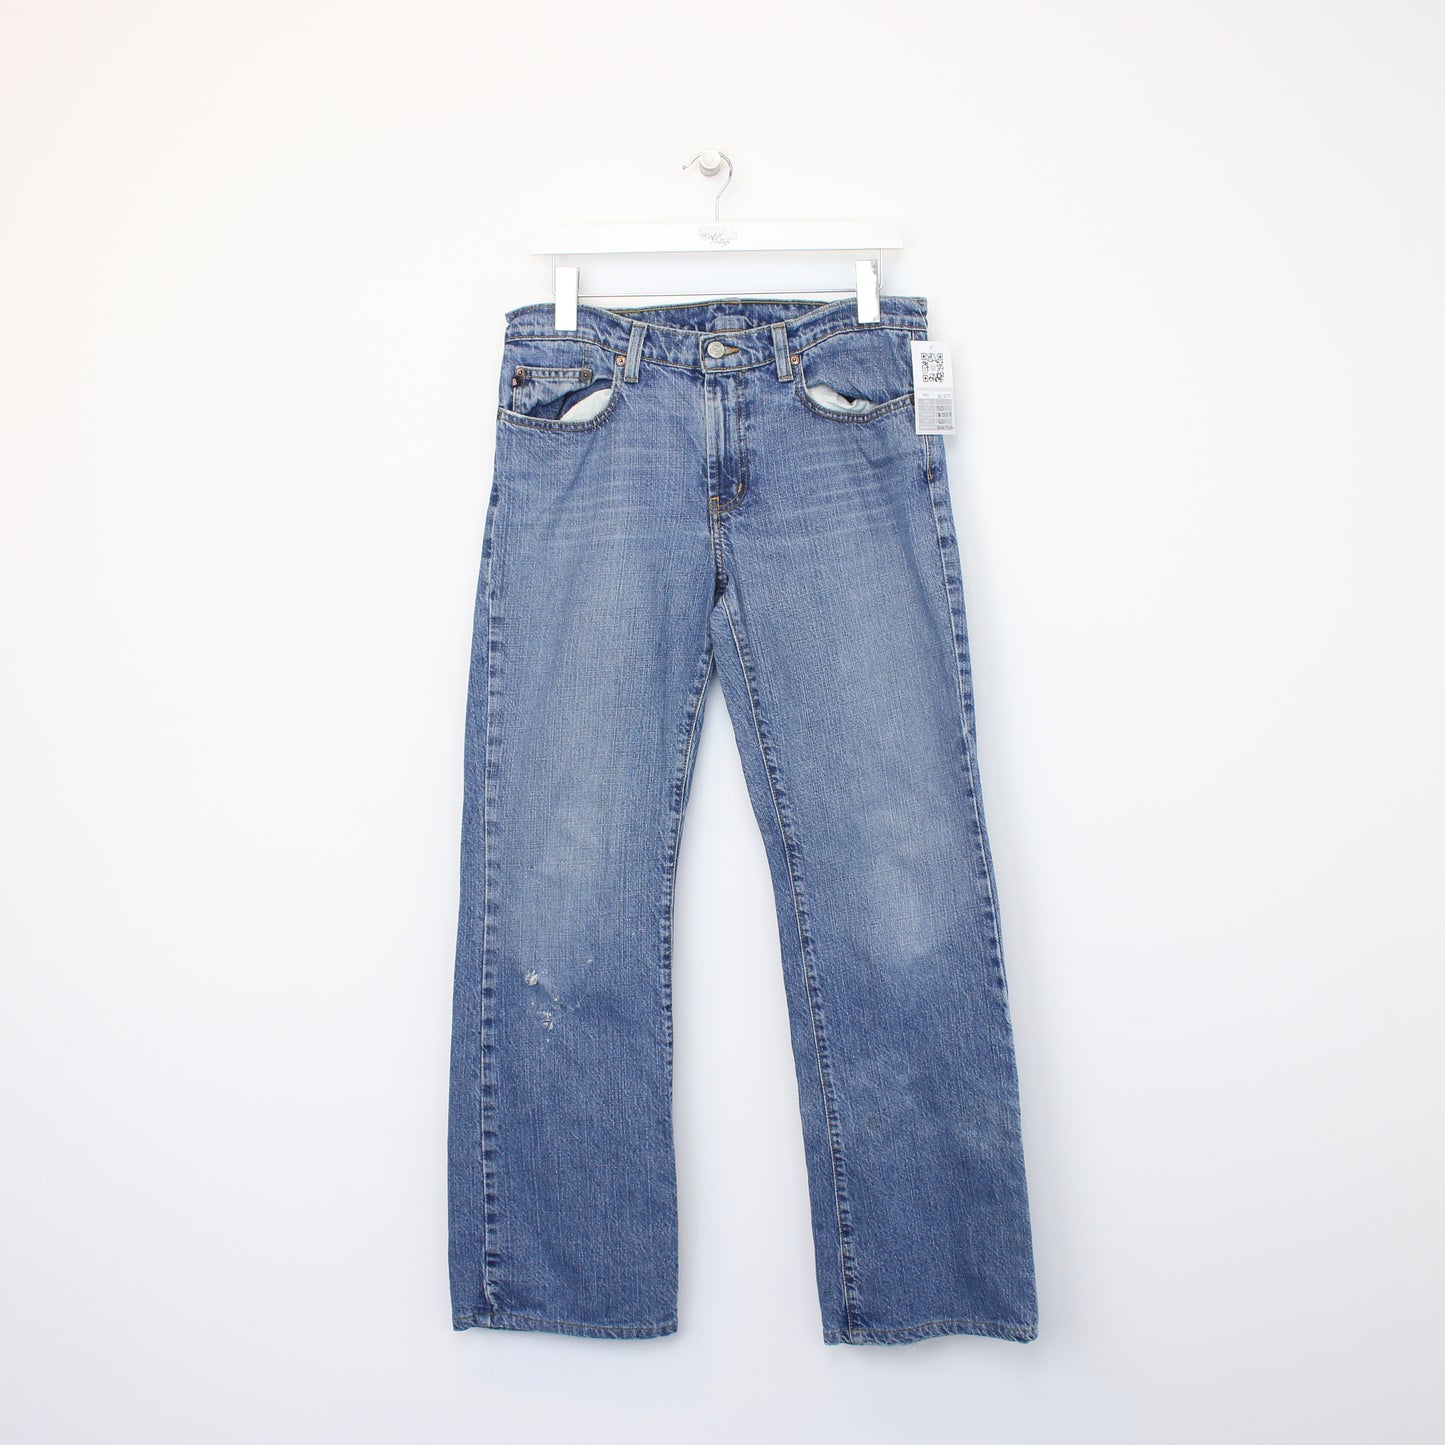 Vintage Polo Ralph Lauren jeans in blue. Best fits W30 L30.5